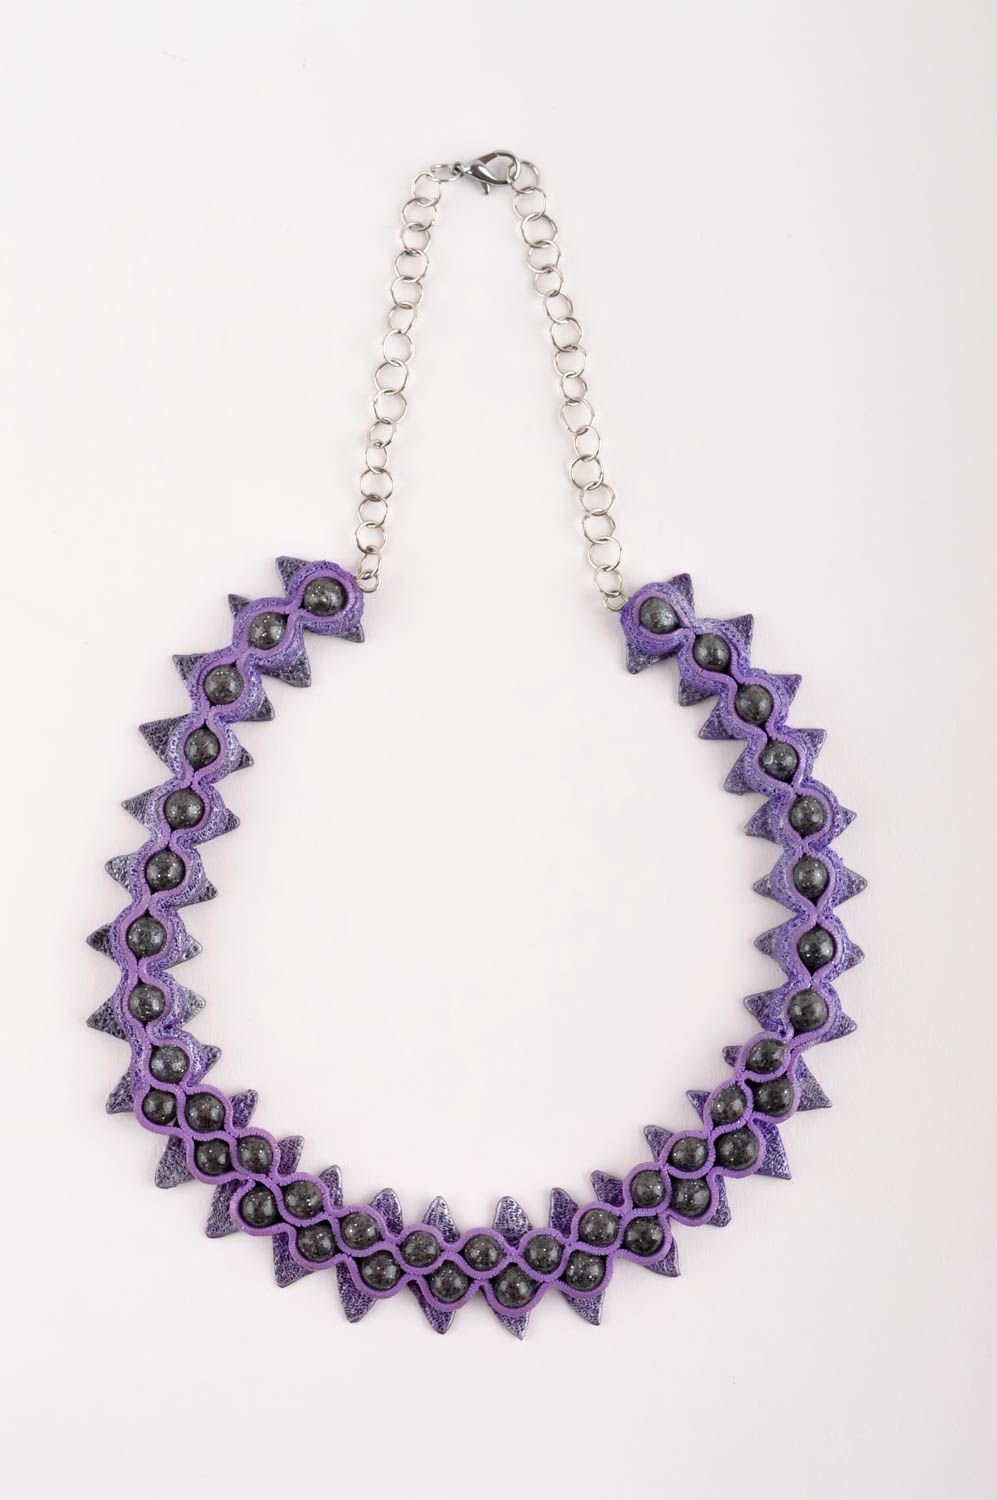 Handmade stylish necklace elegant designer necklace gift ideas for her photo 2